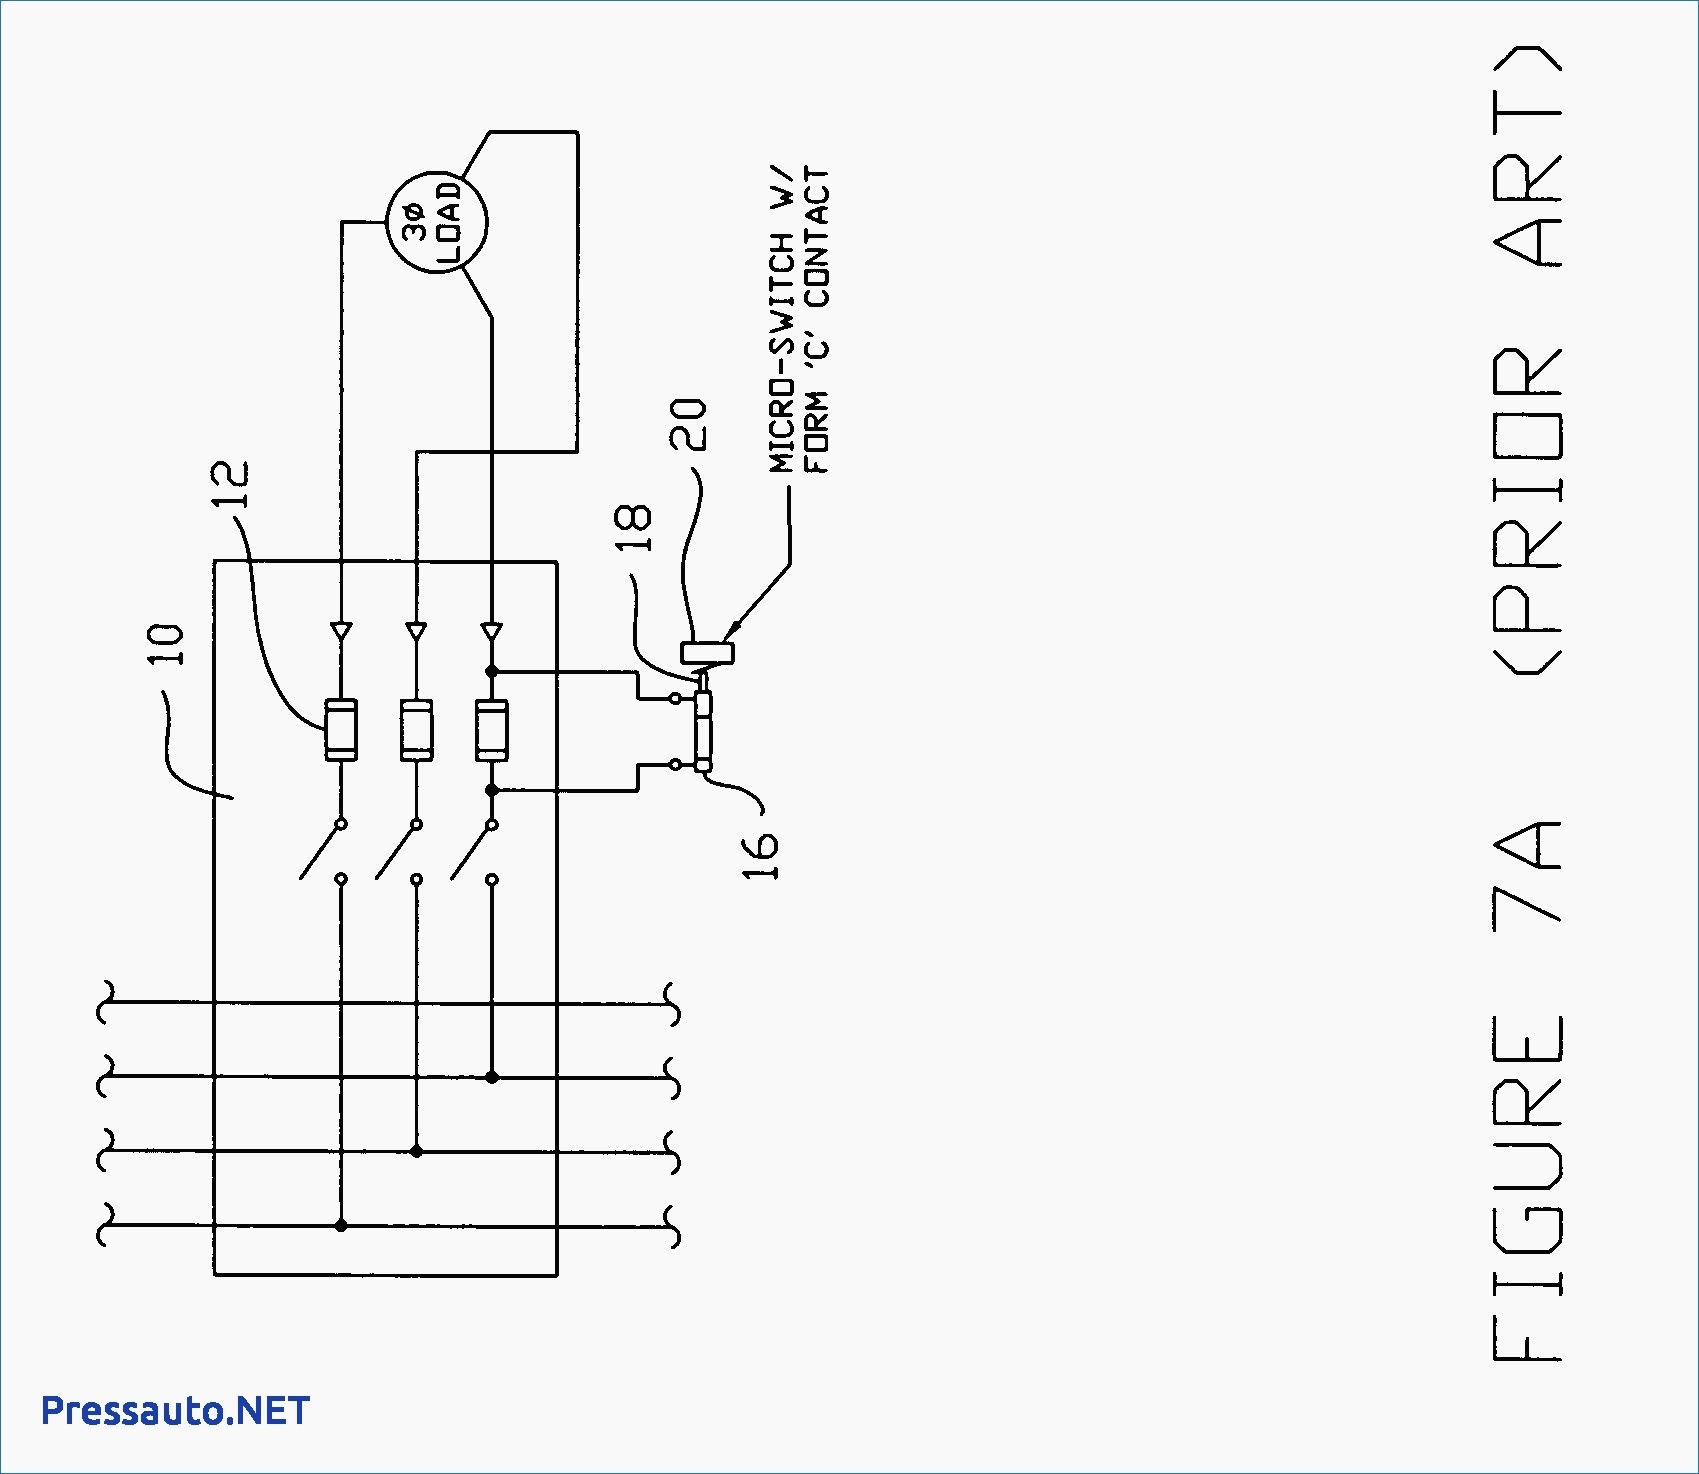 Physical Wiring Diagram Of Universal Circuit Breaker 28